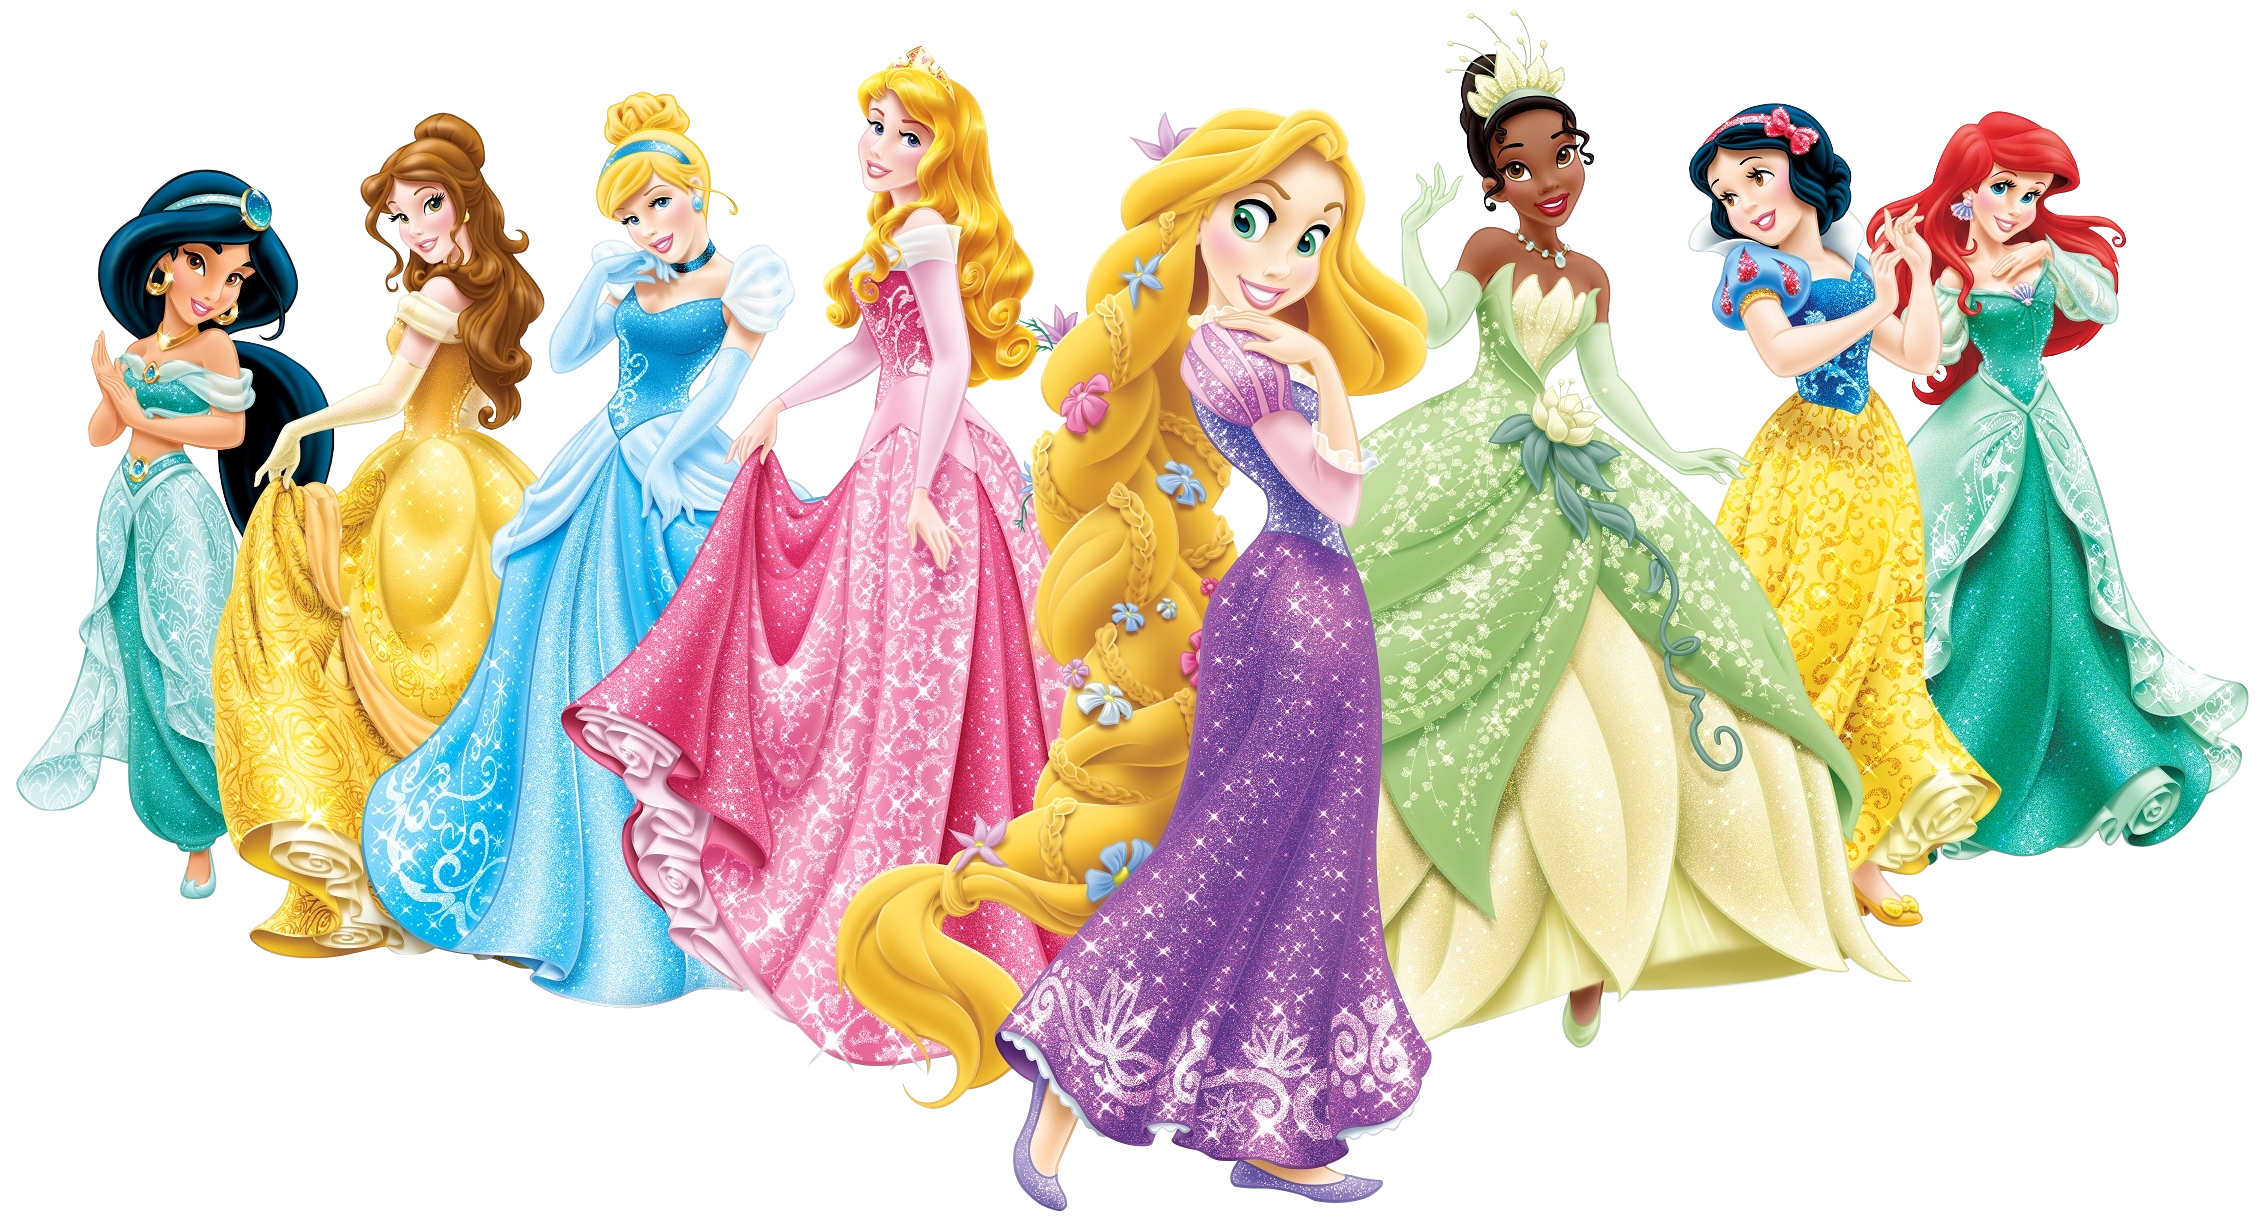 Disney Princesses PNG Cartoon Image.